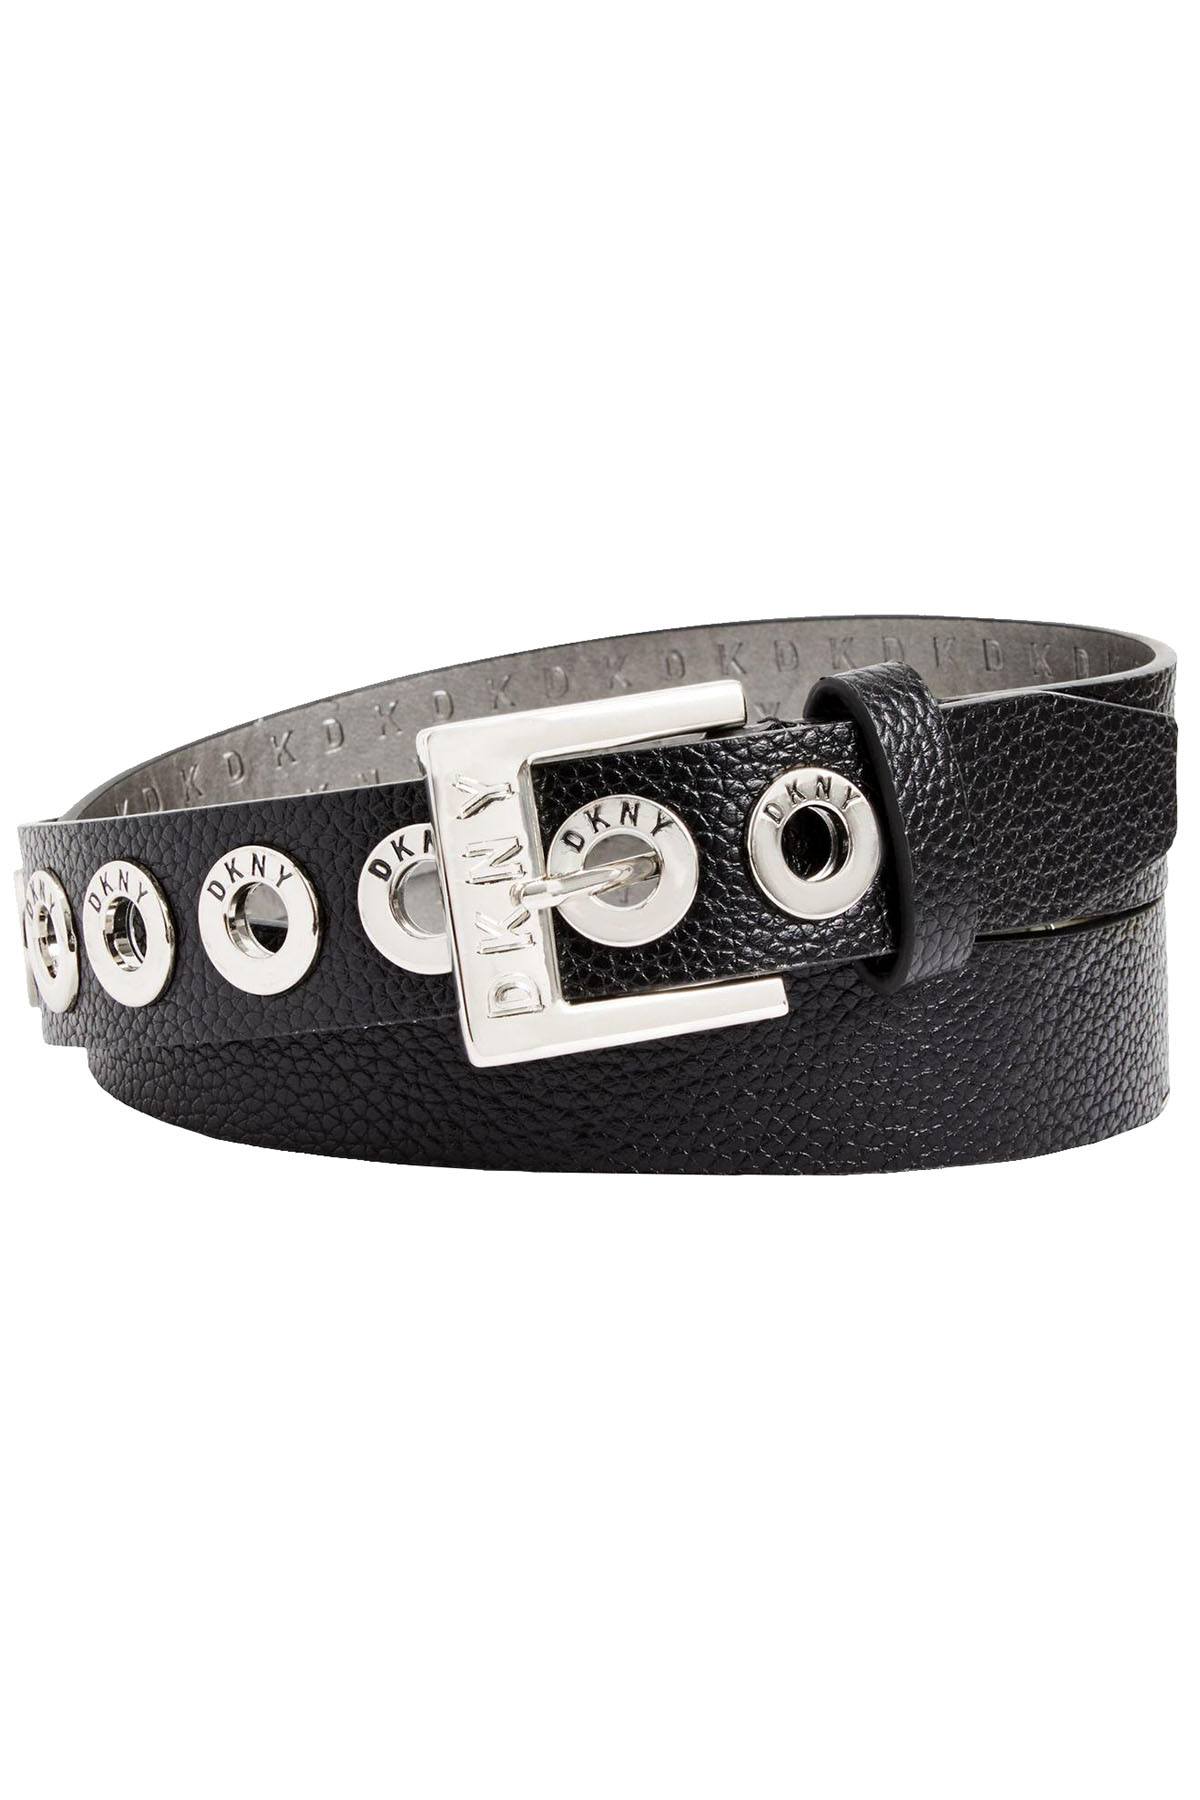 DKNY Black Pebbled Faux Leather Grommet Belt